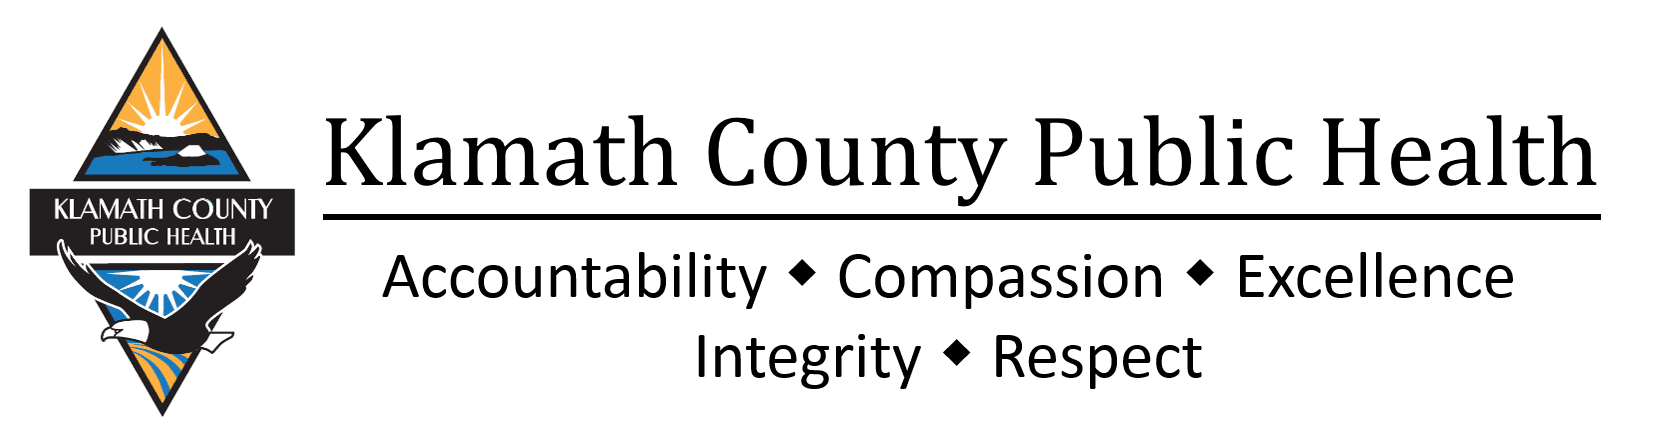 Klamath County Public Health